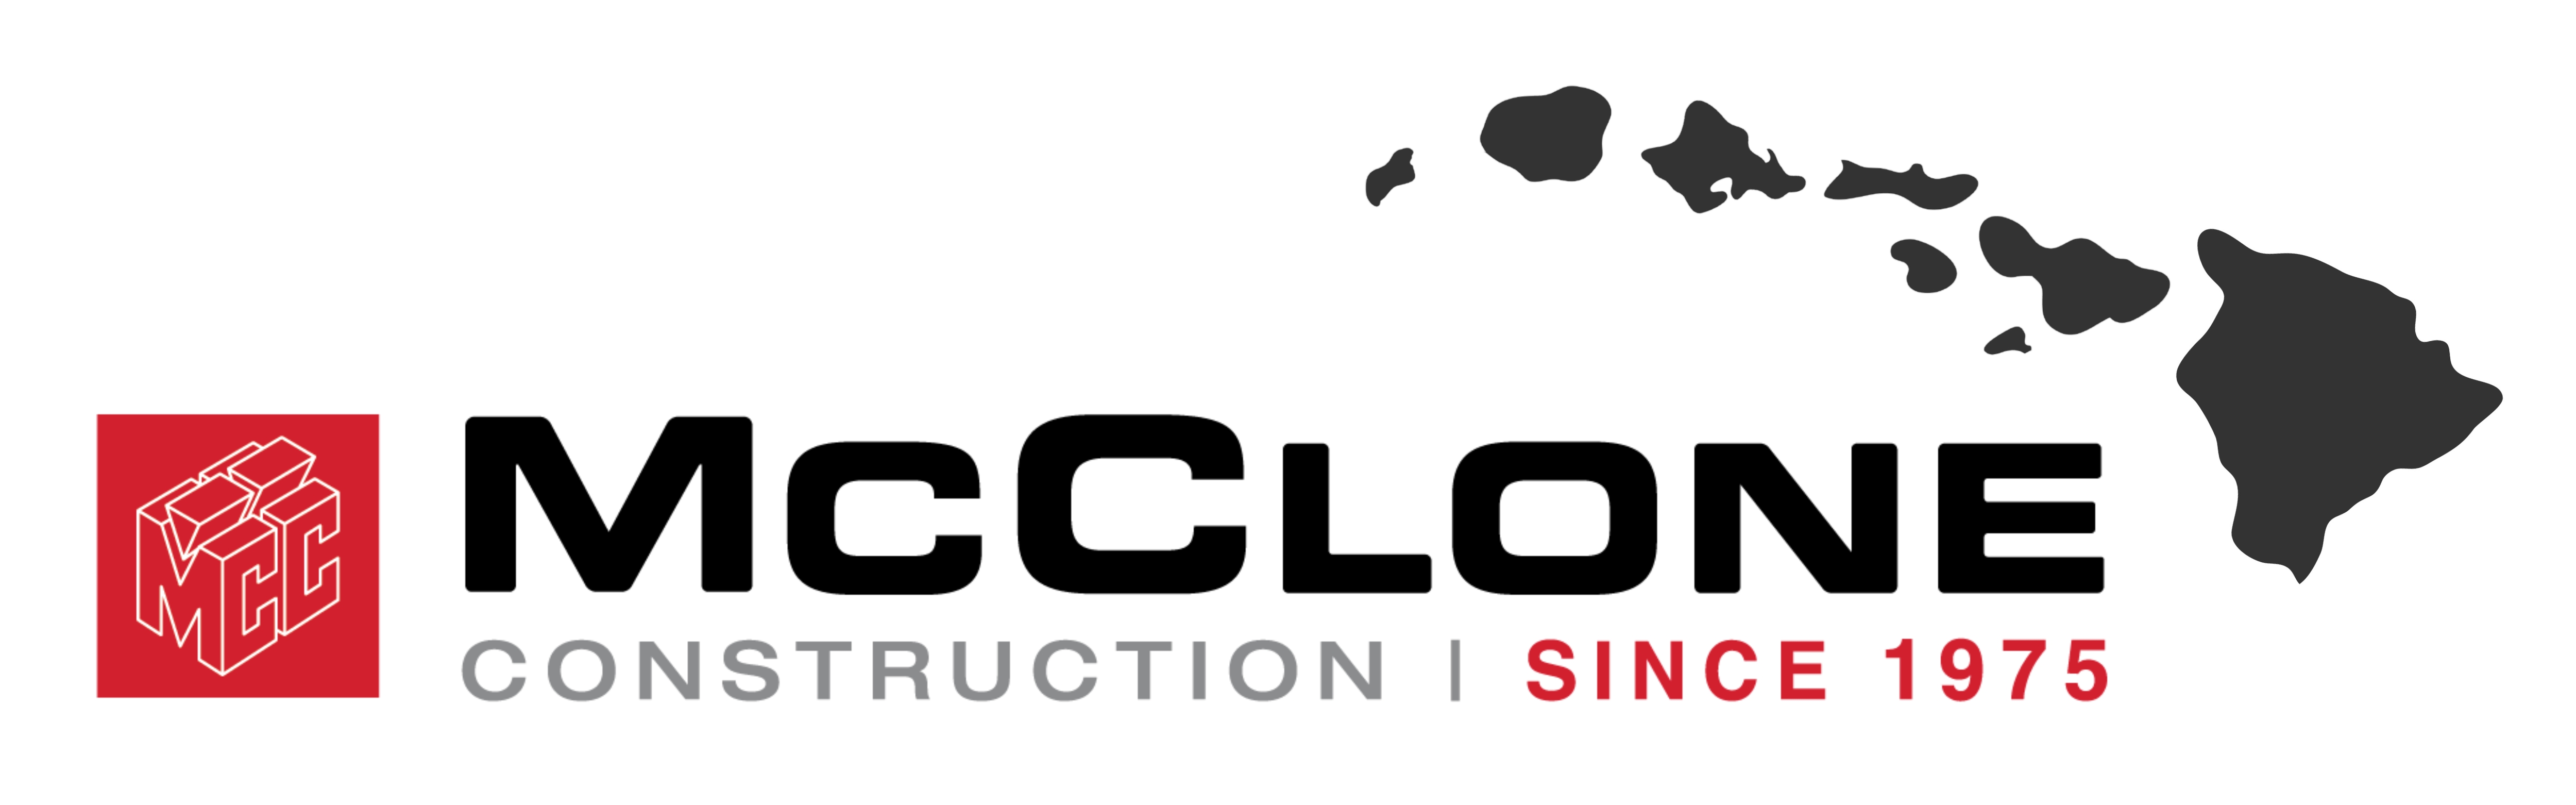 McClone Construction Company